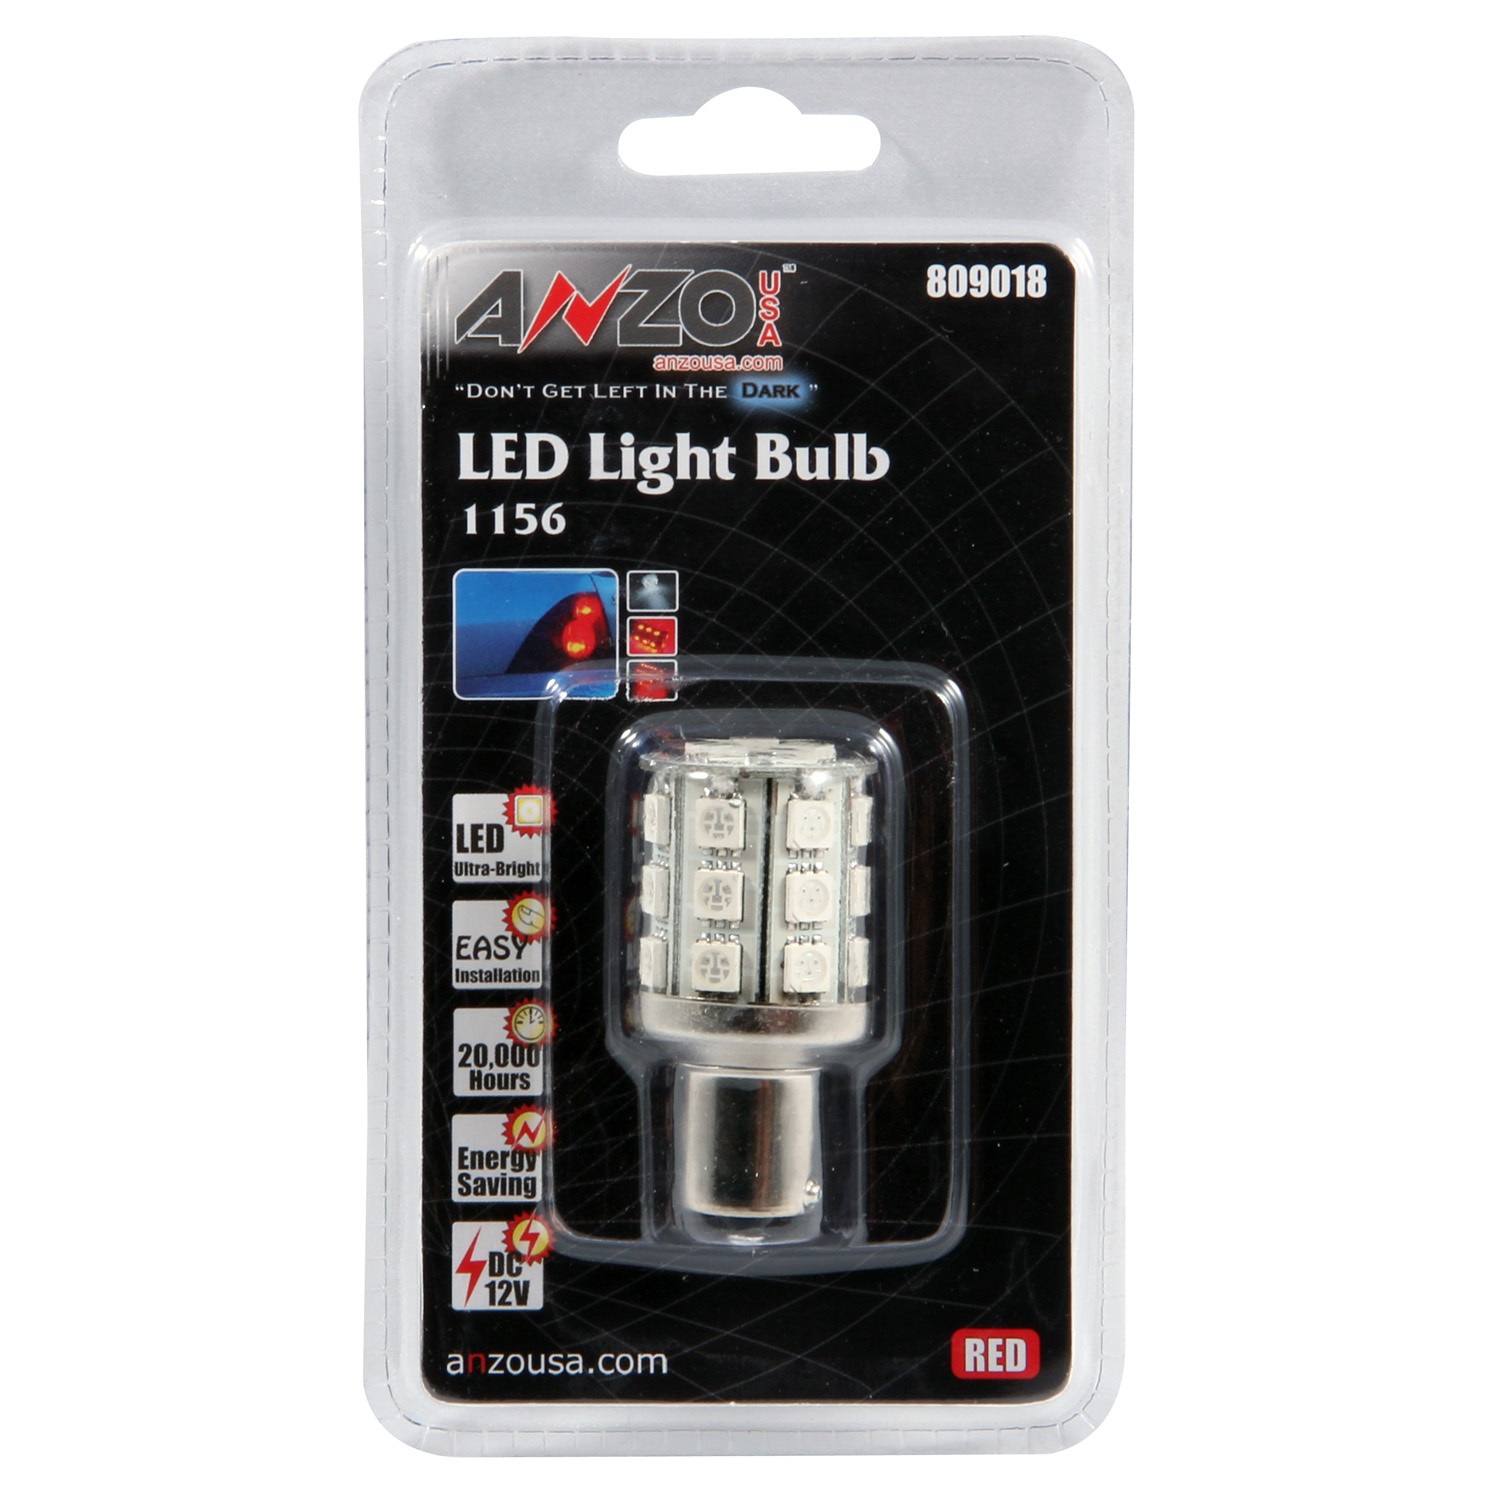 Anzo USA Anzo USA 809018 LED Replacement Bulb